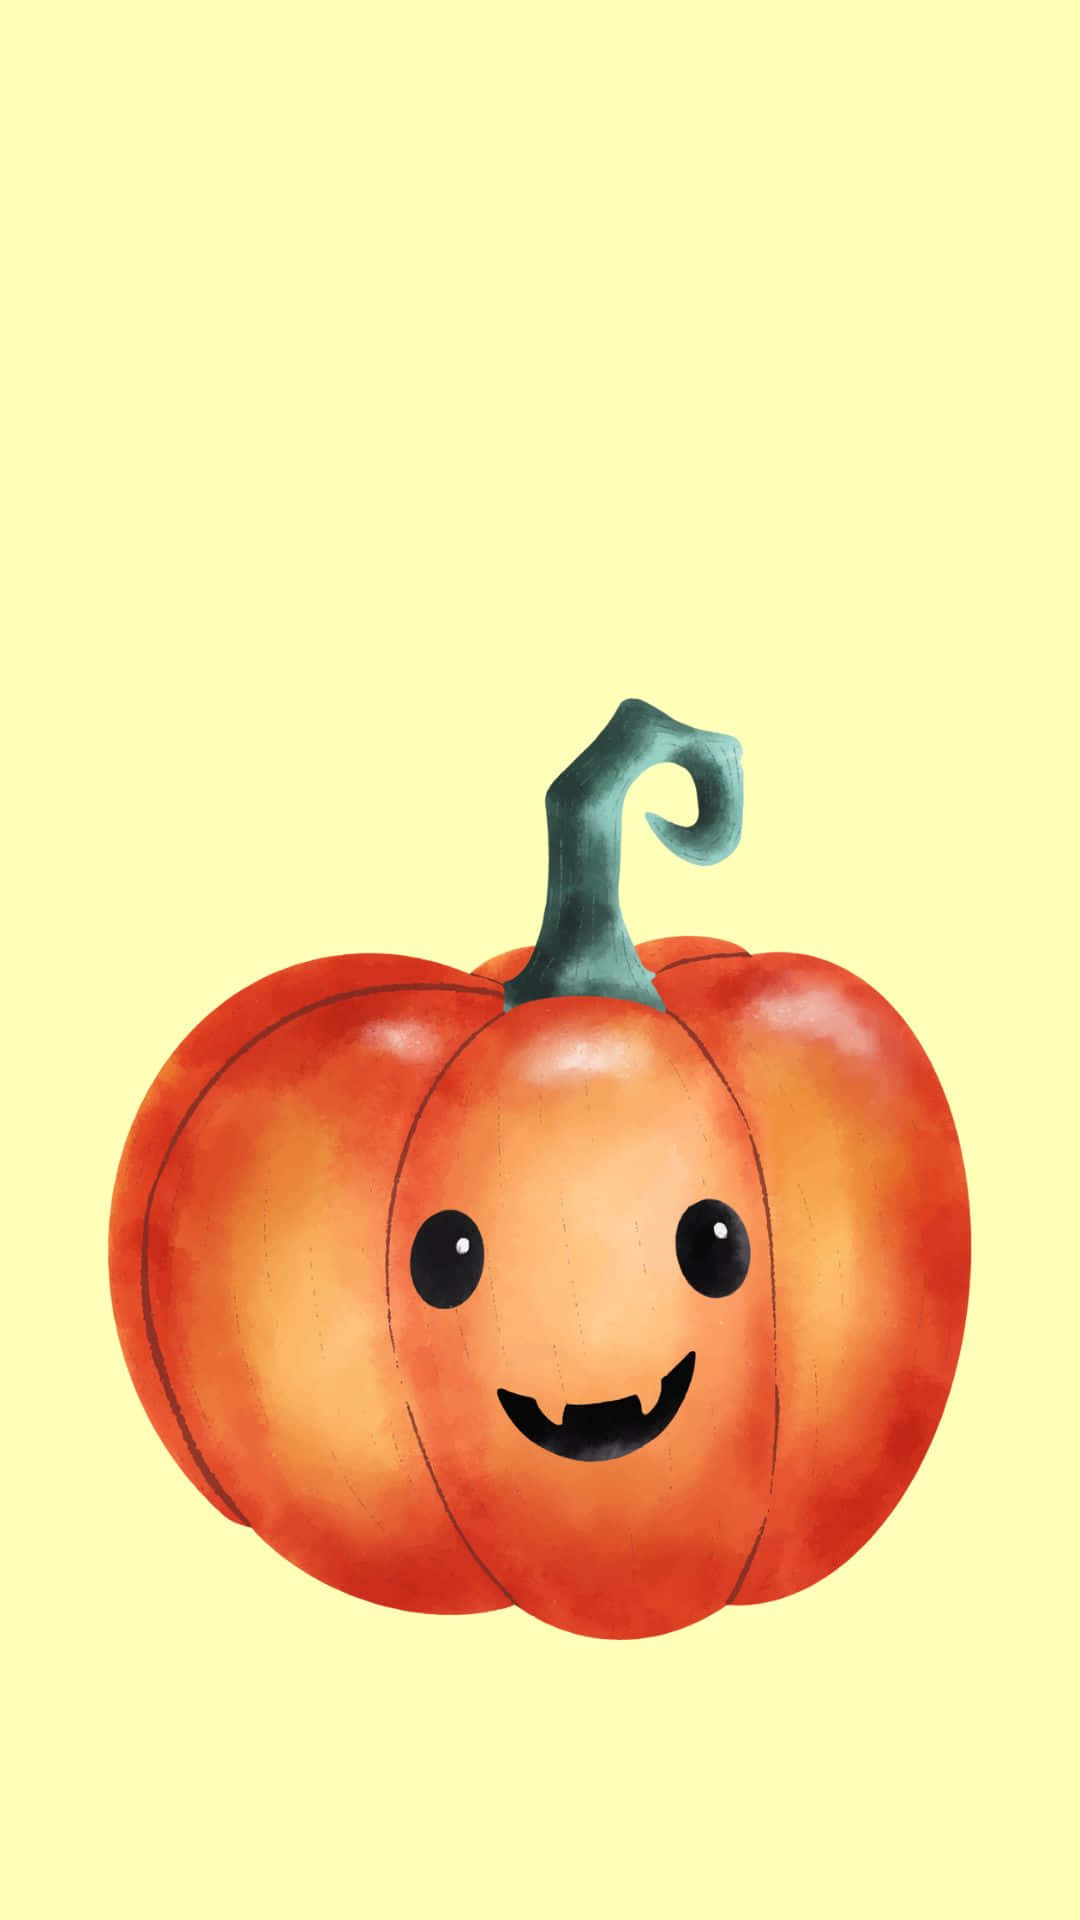 Adorable Cute Pumpkin with Big Bright Eyes Wallpaper